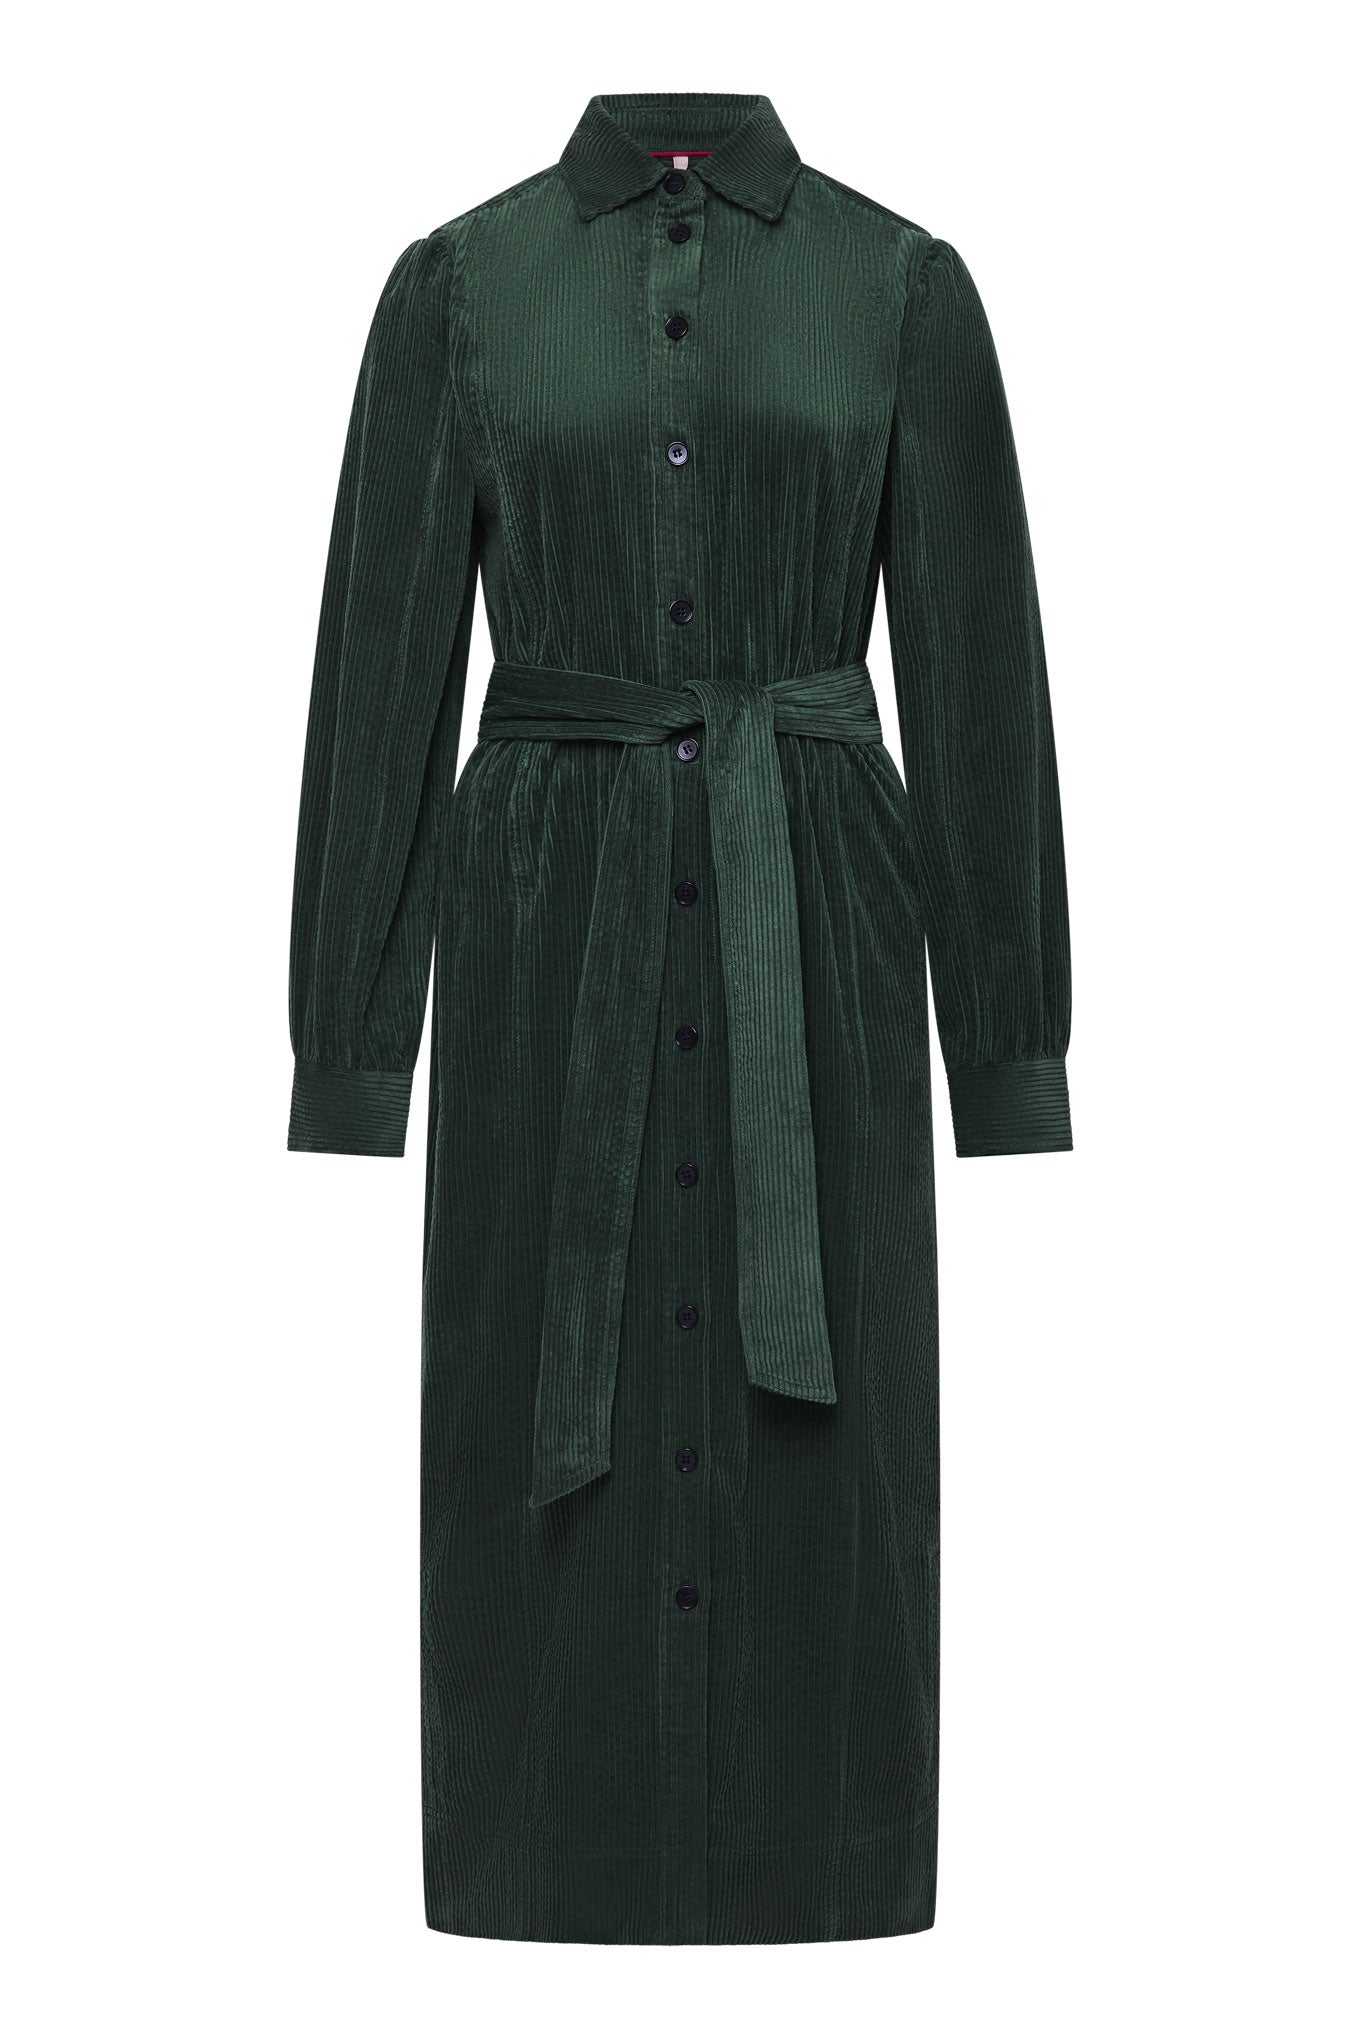 Dark green, long corduroy dress REINA made from 100% organic cotton by Komodo